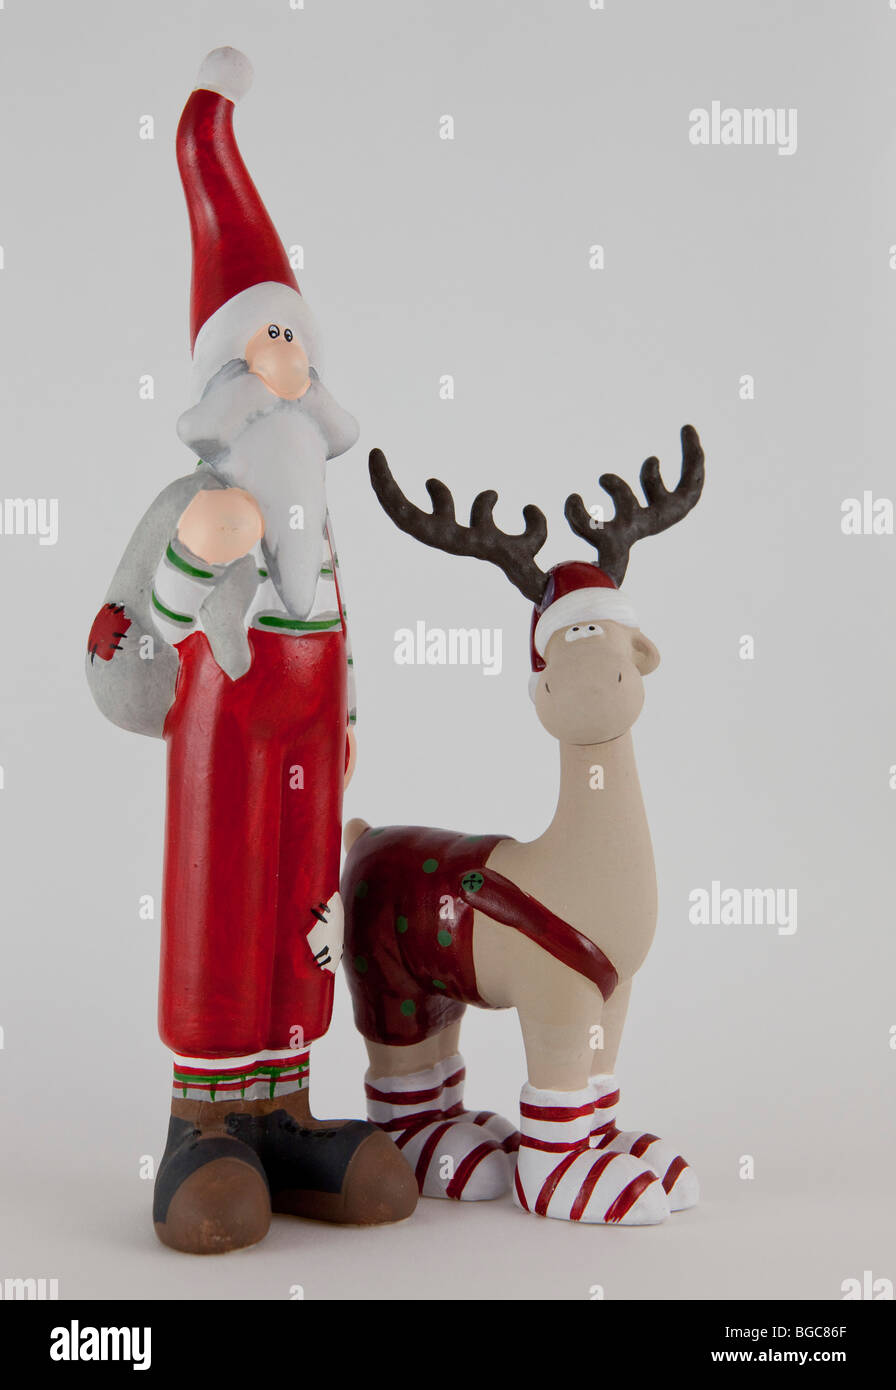 Santa Claus and reindeer, ceramic figurines Stock Photo